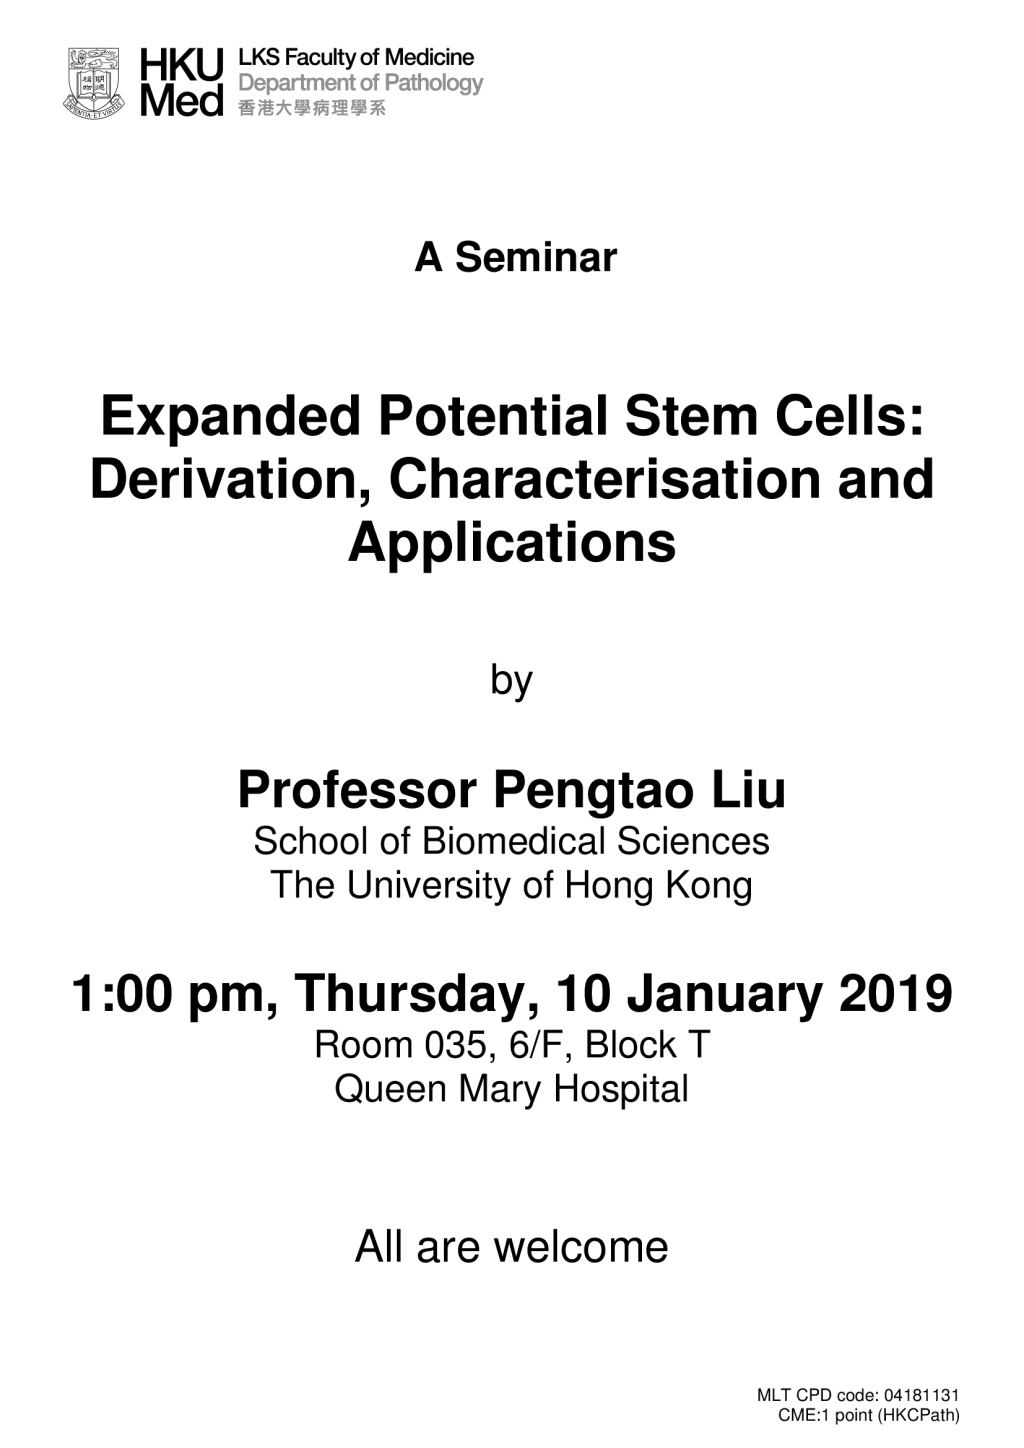 A seminar by Professor Pengtao Liu on 10 Jan 2019 (1 pm)